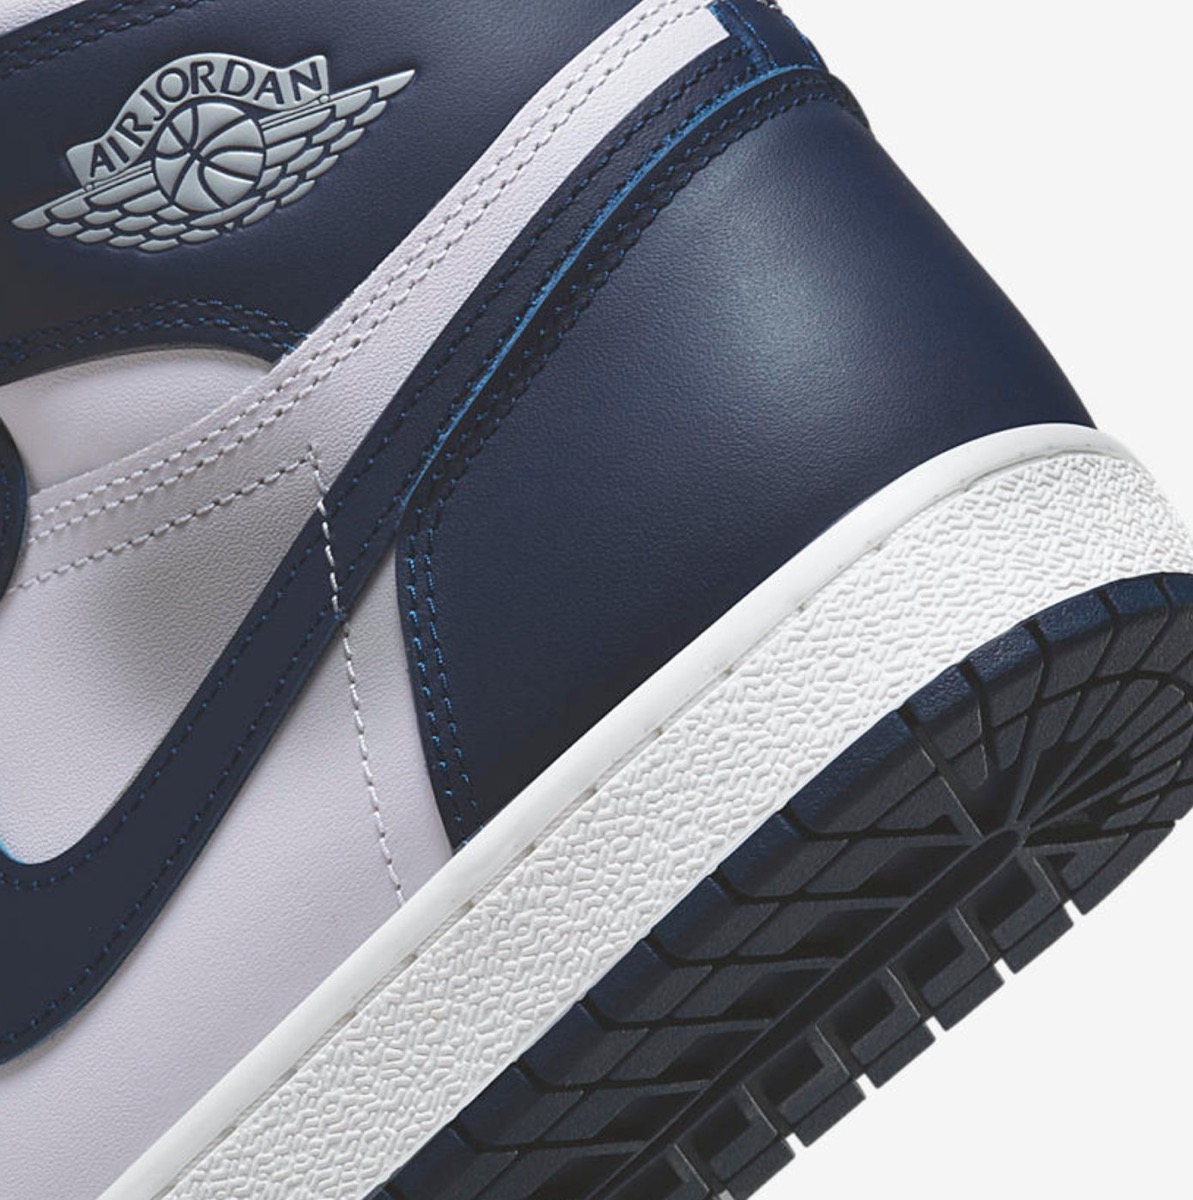 Nike】Air Jordan 1 High '85 “Georgetown”が国内2月16日より発売予定 